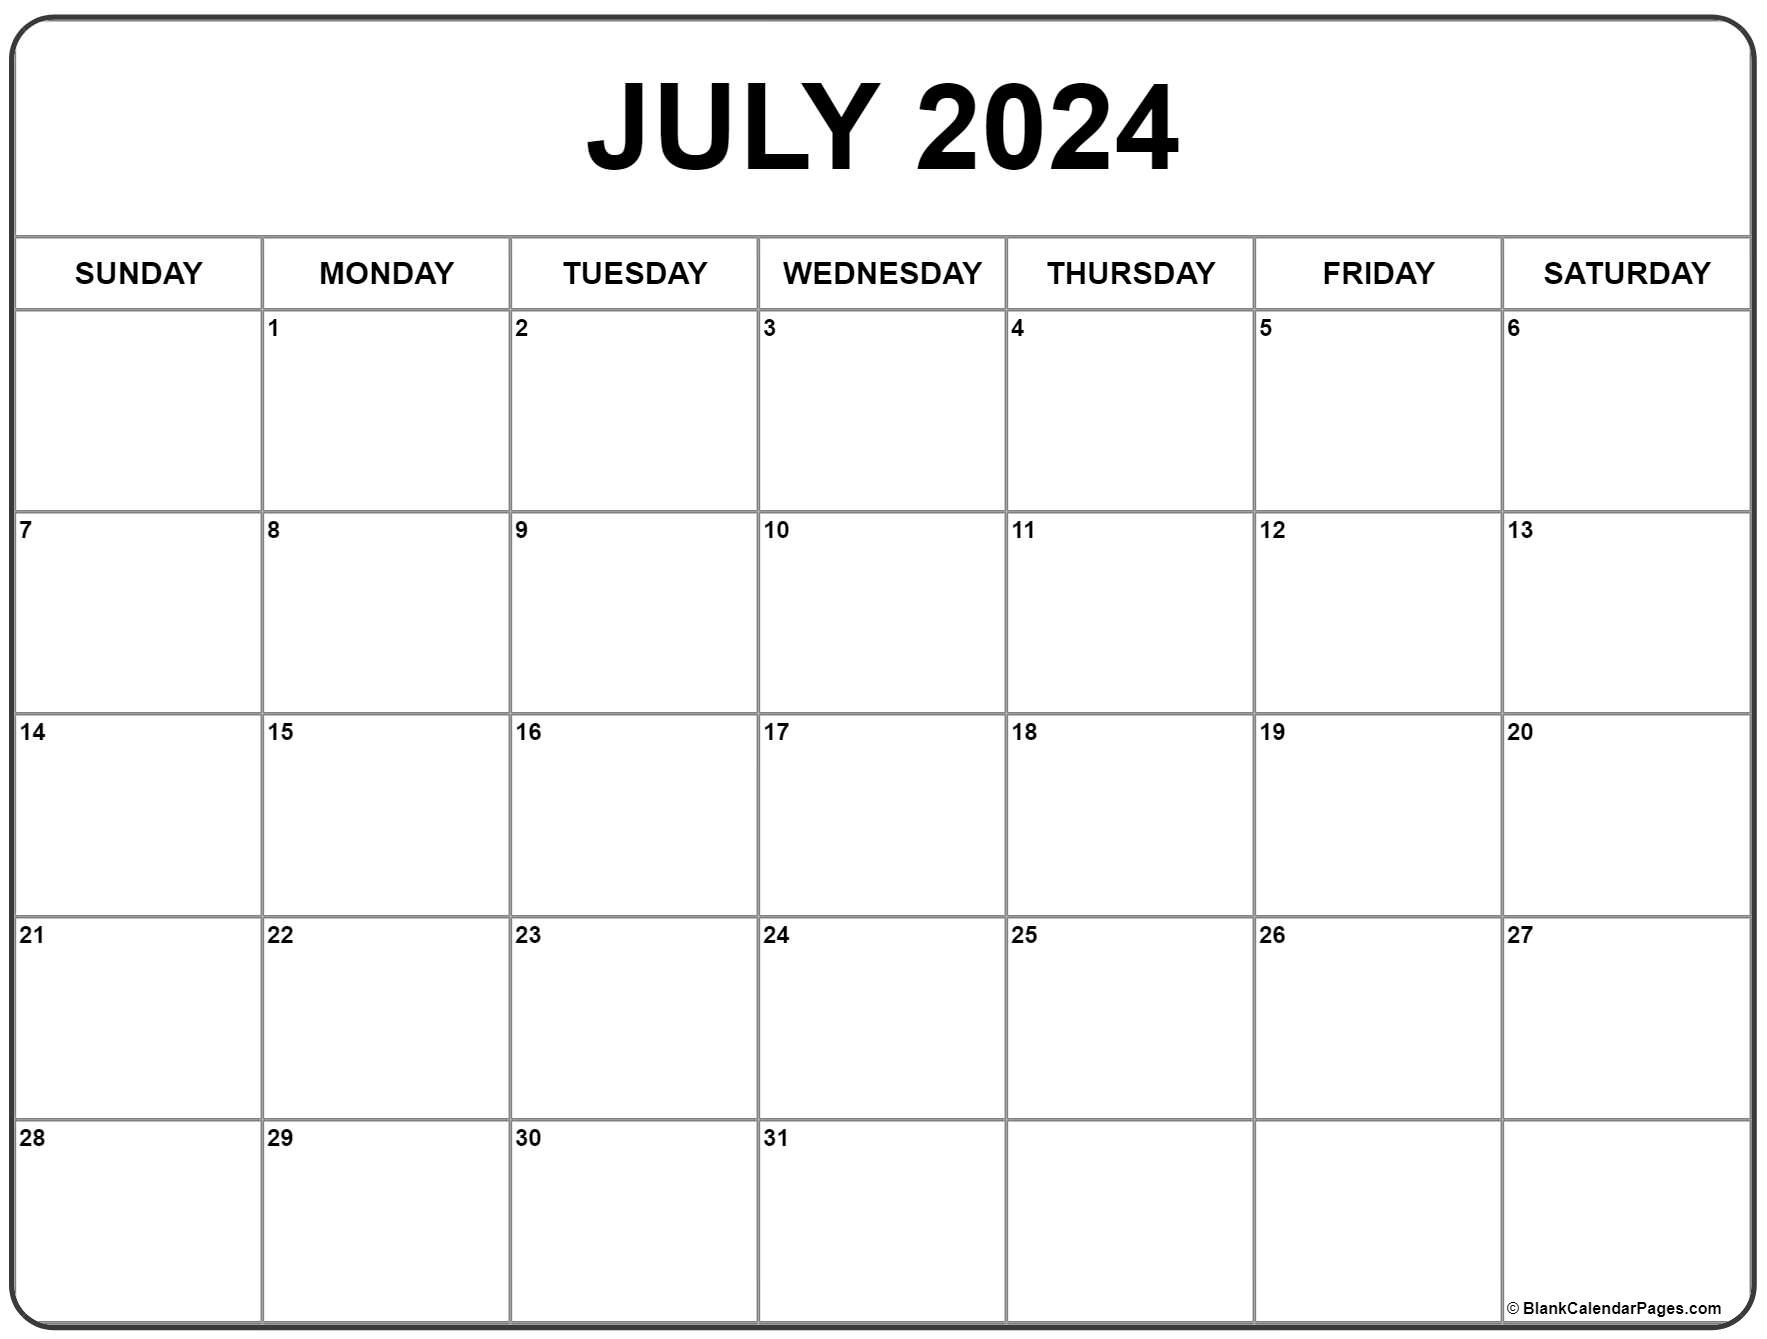 July 2024 Calendar | Free Printable Calendar for Free July 2024 Printable Calendar